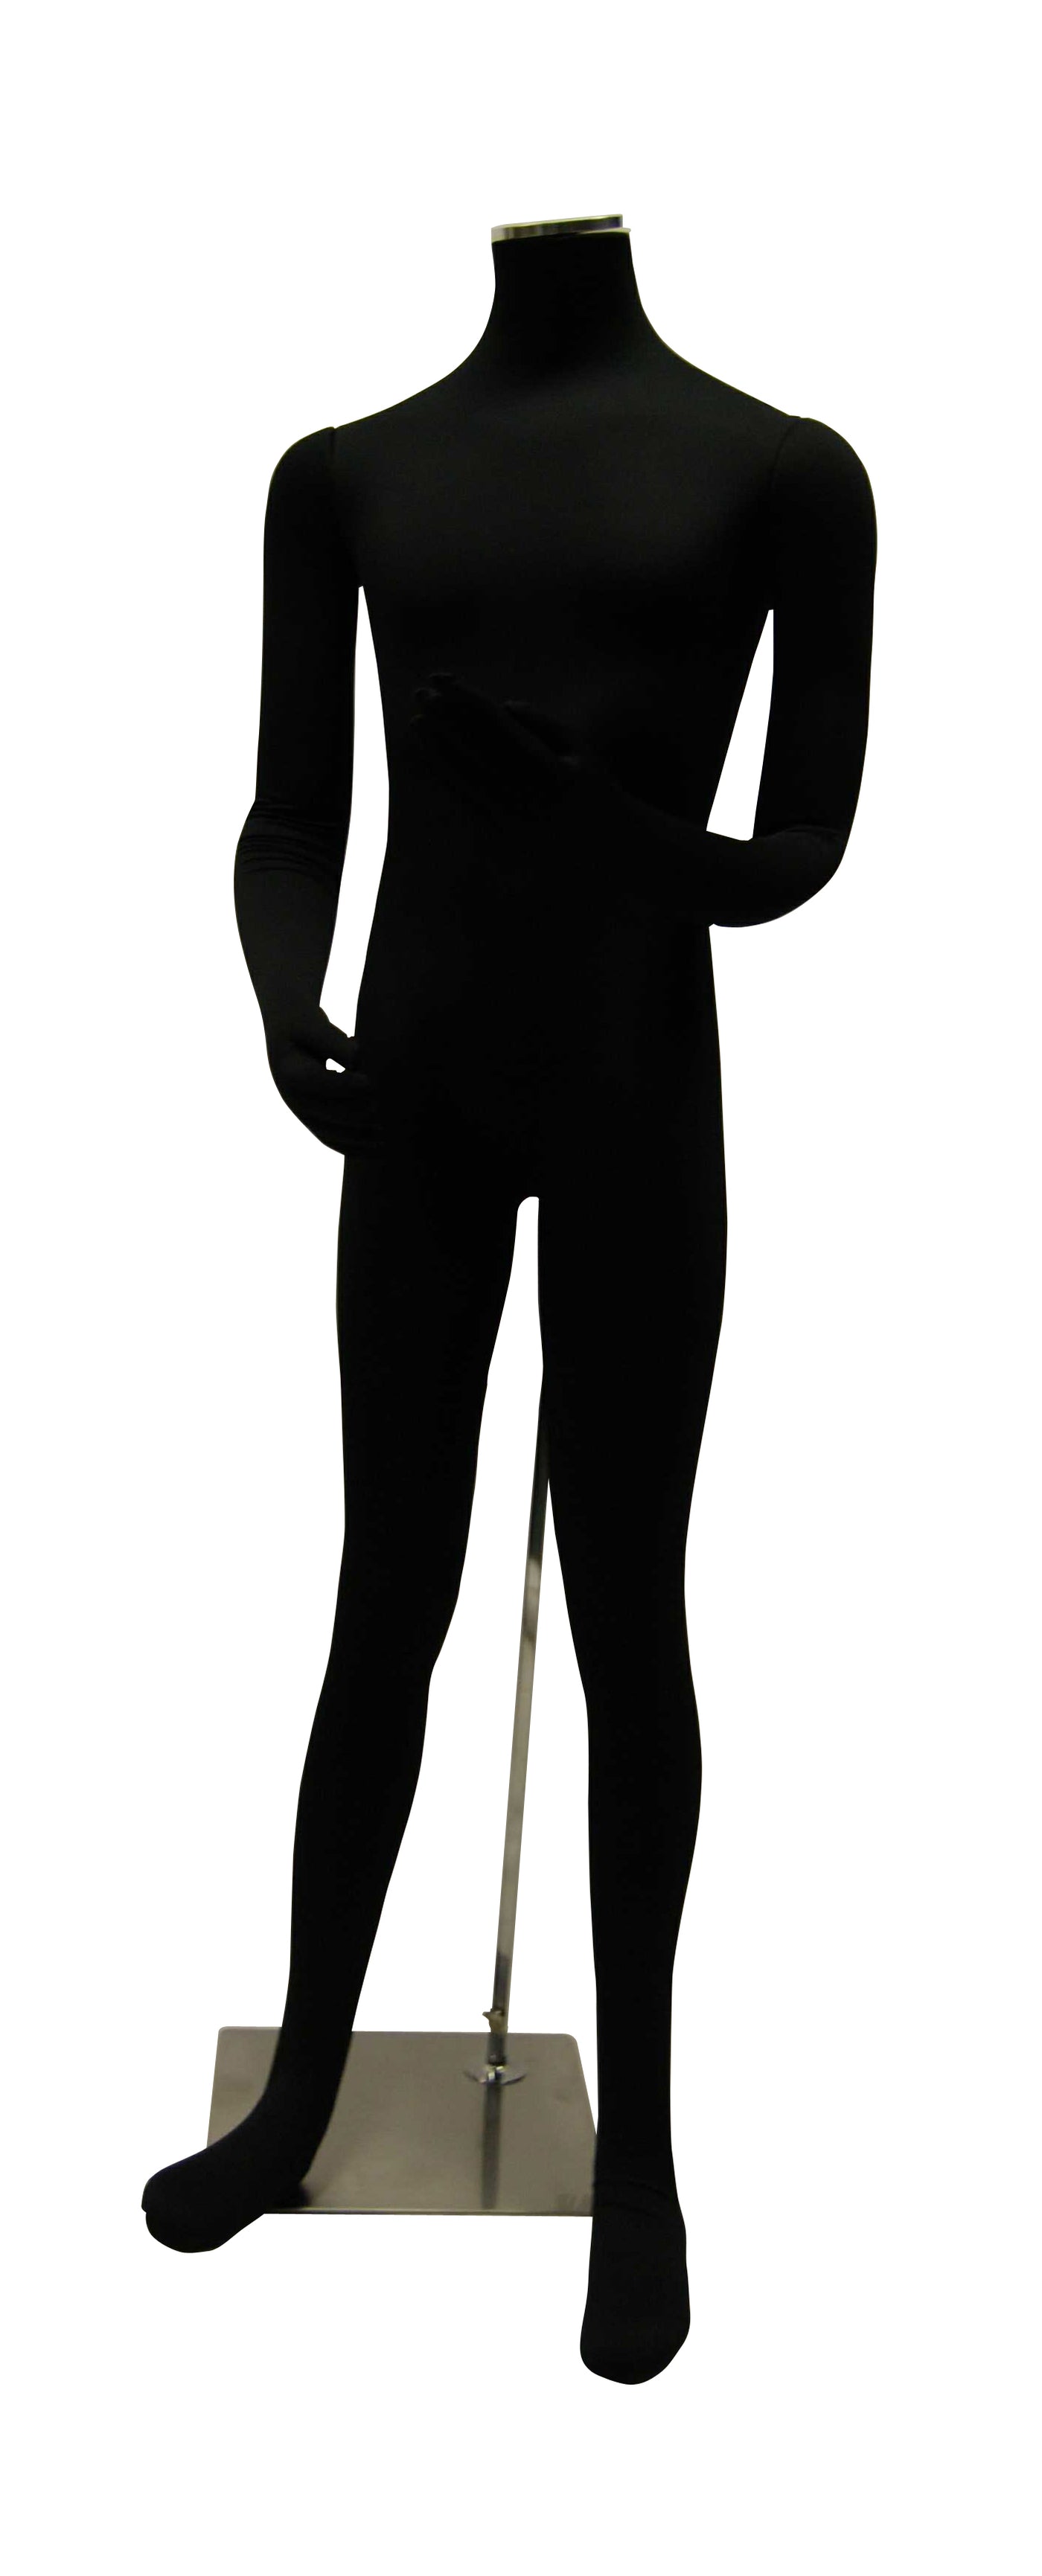 Male Egghead Torso Mannequin with Removable Arms, Black Color